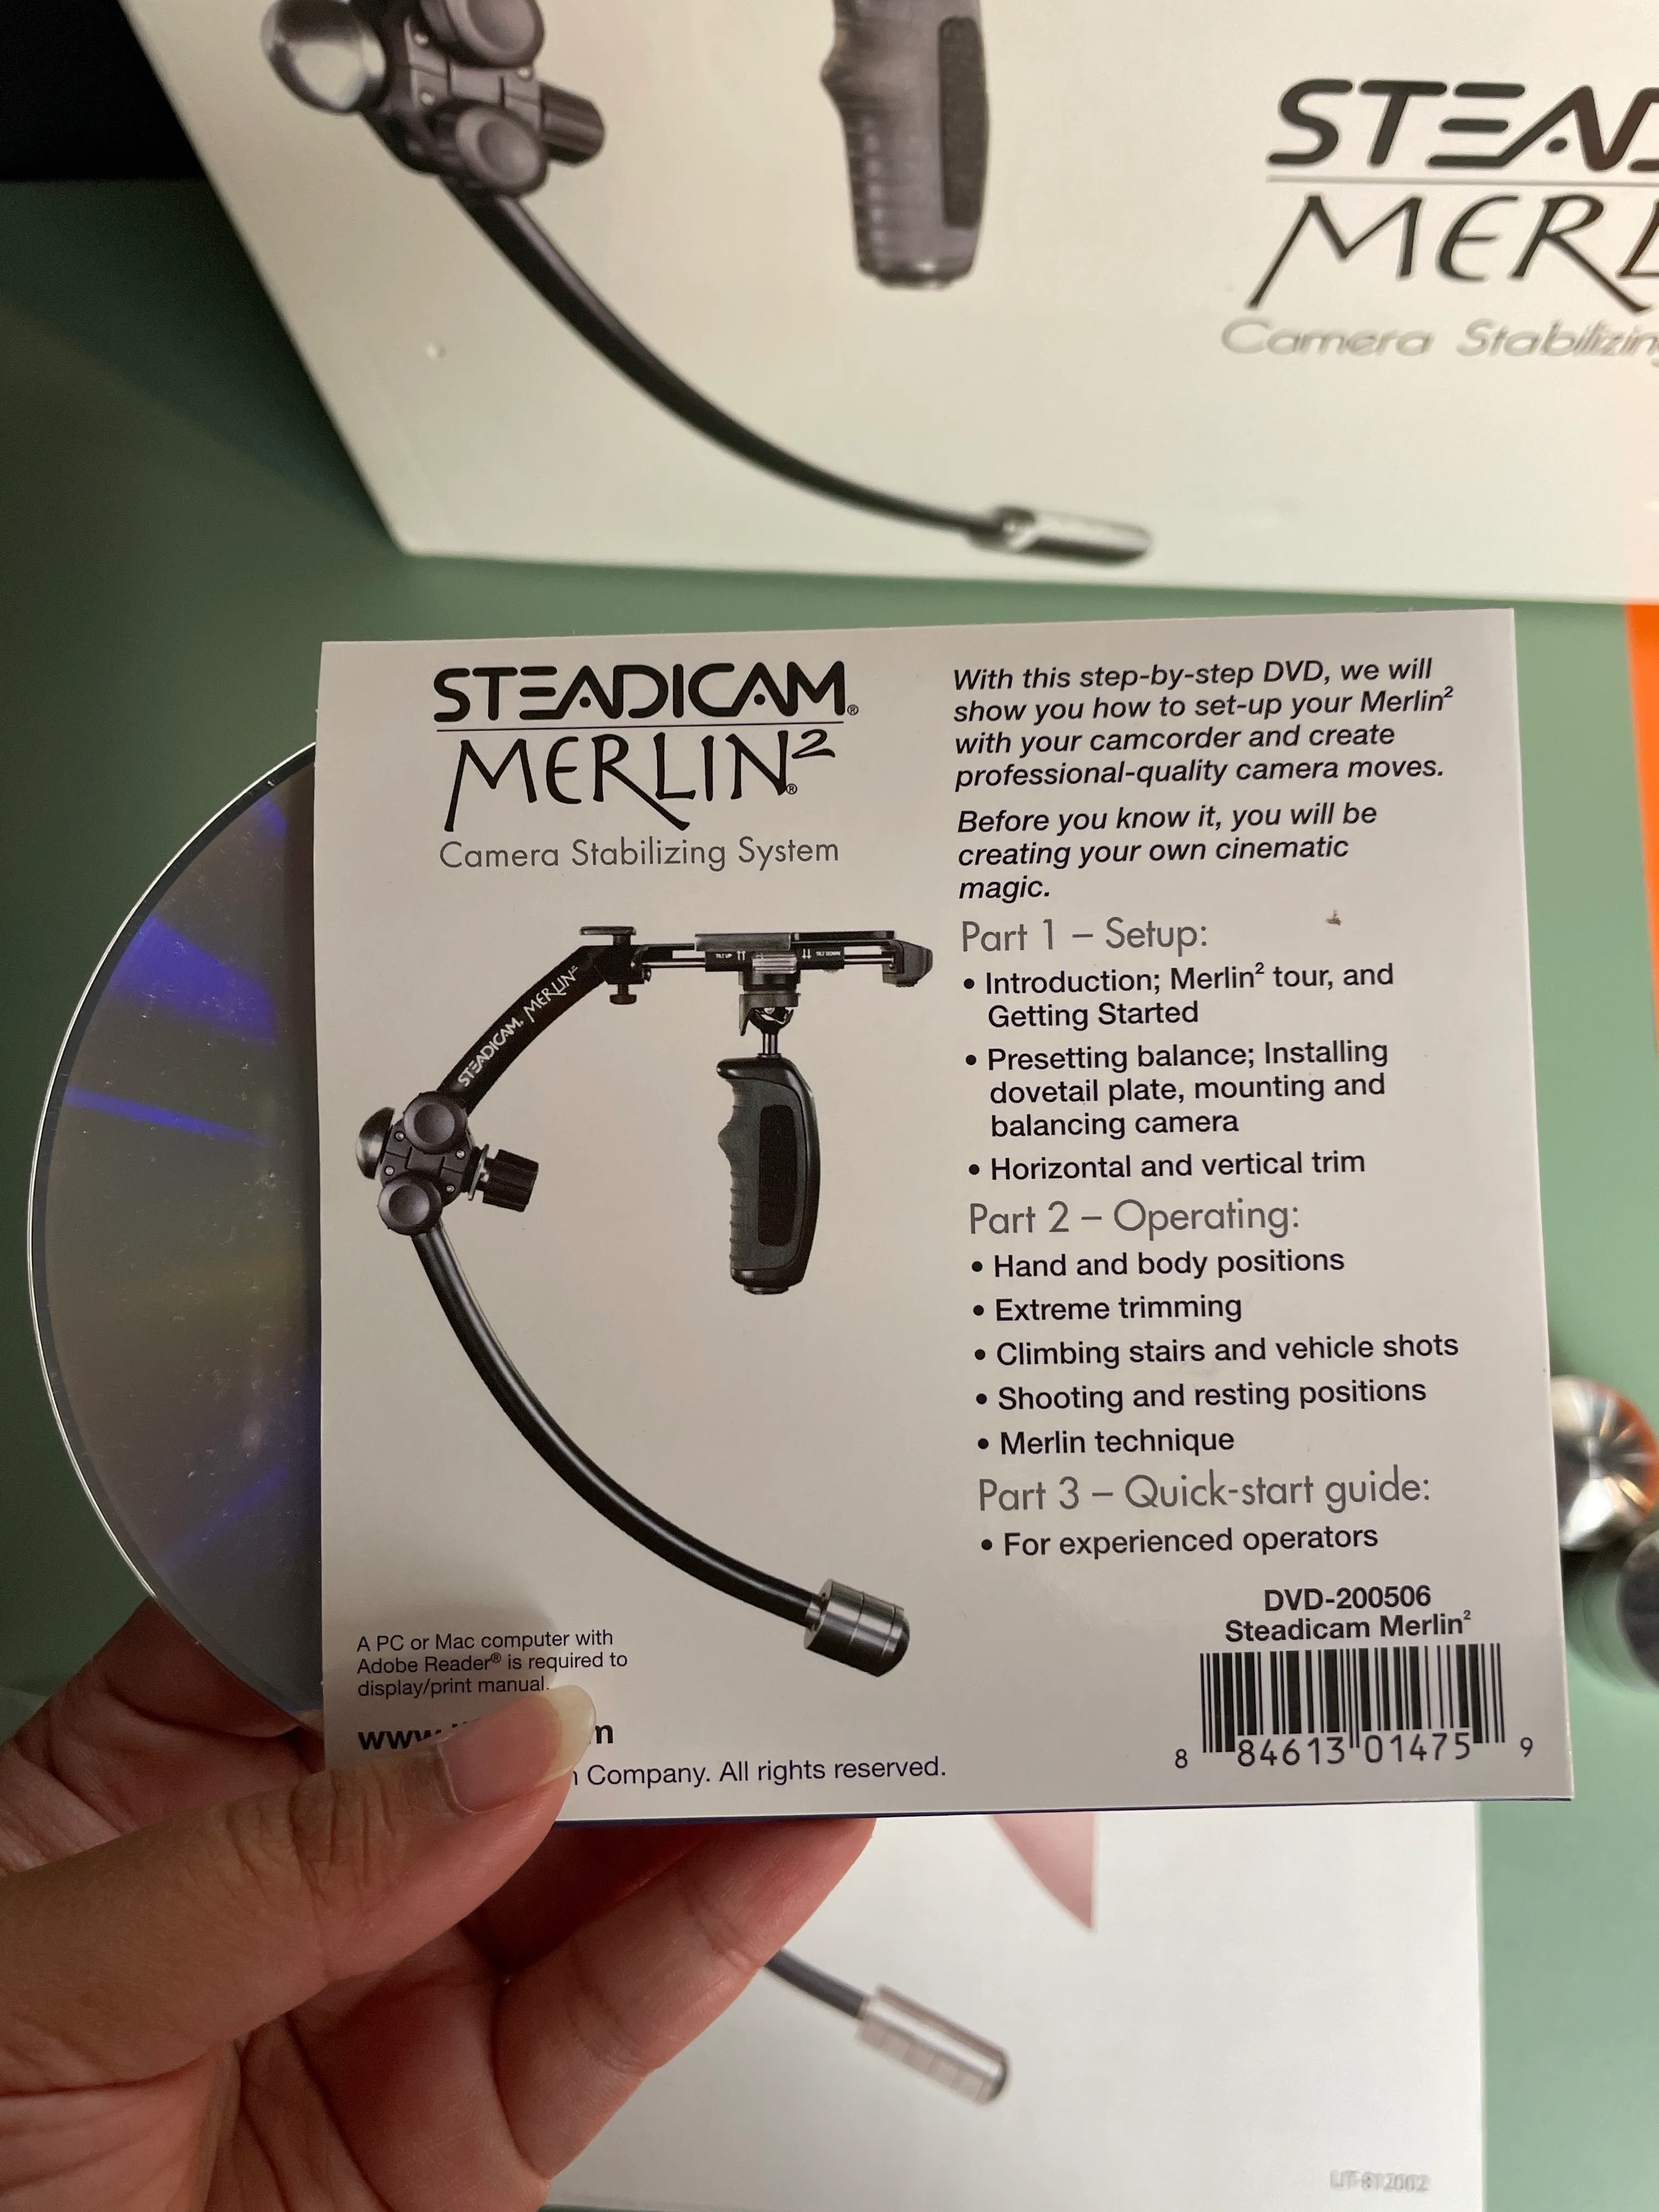 Steadicam Merlin 2 media